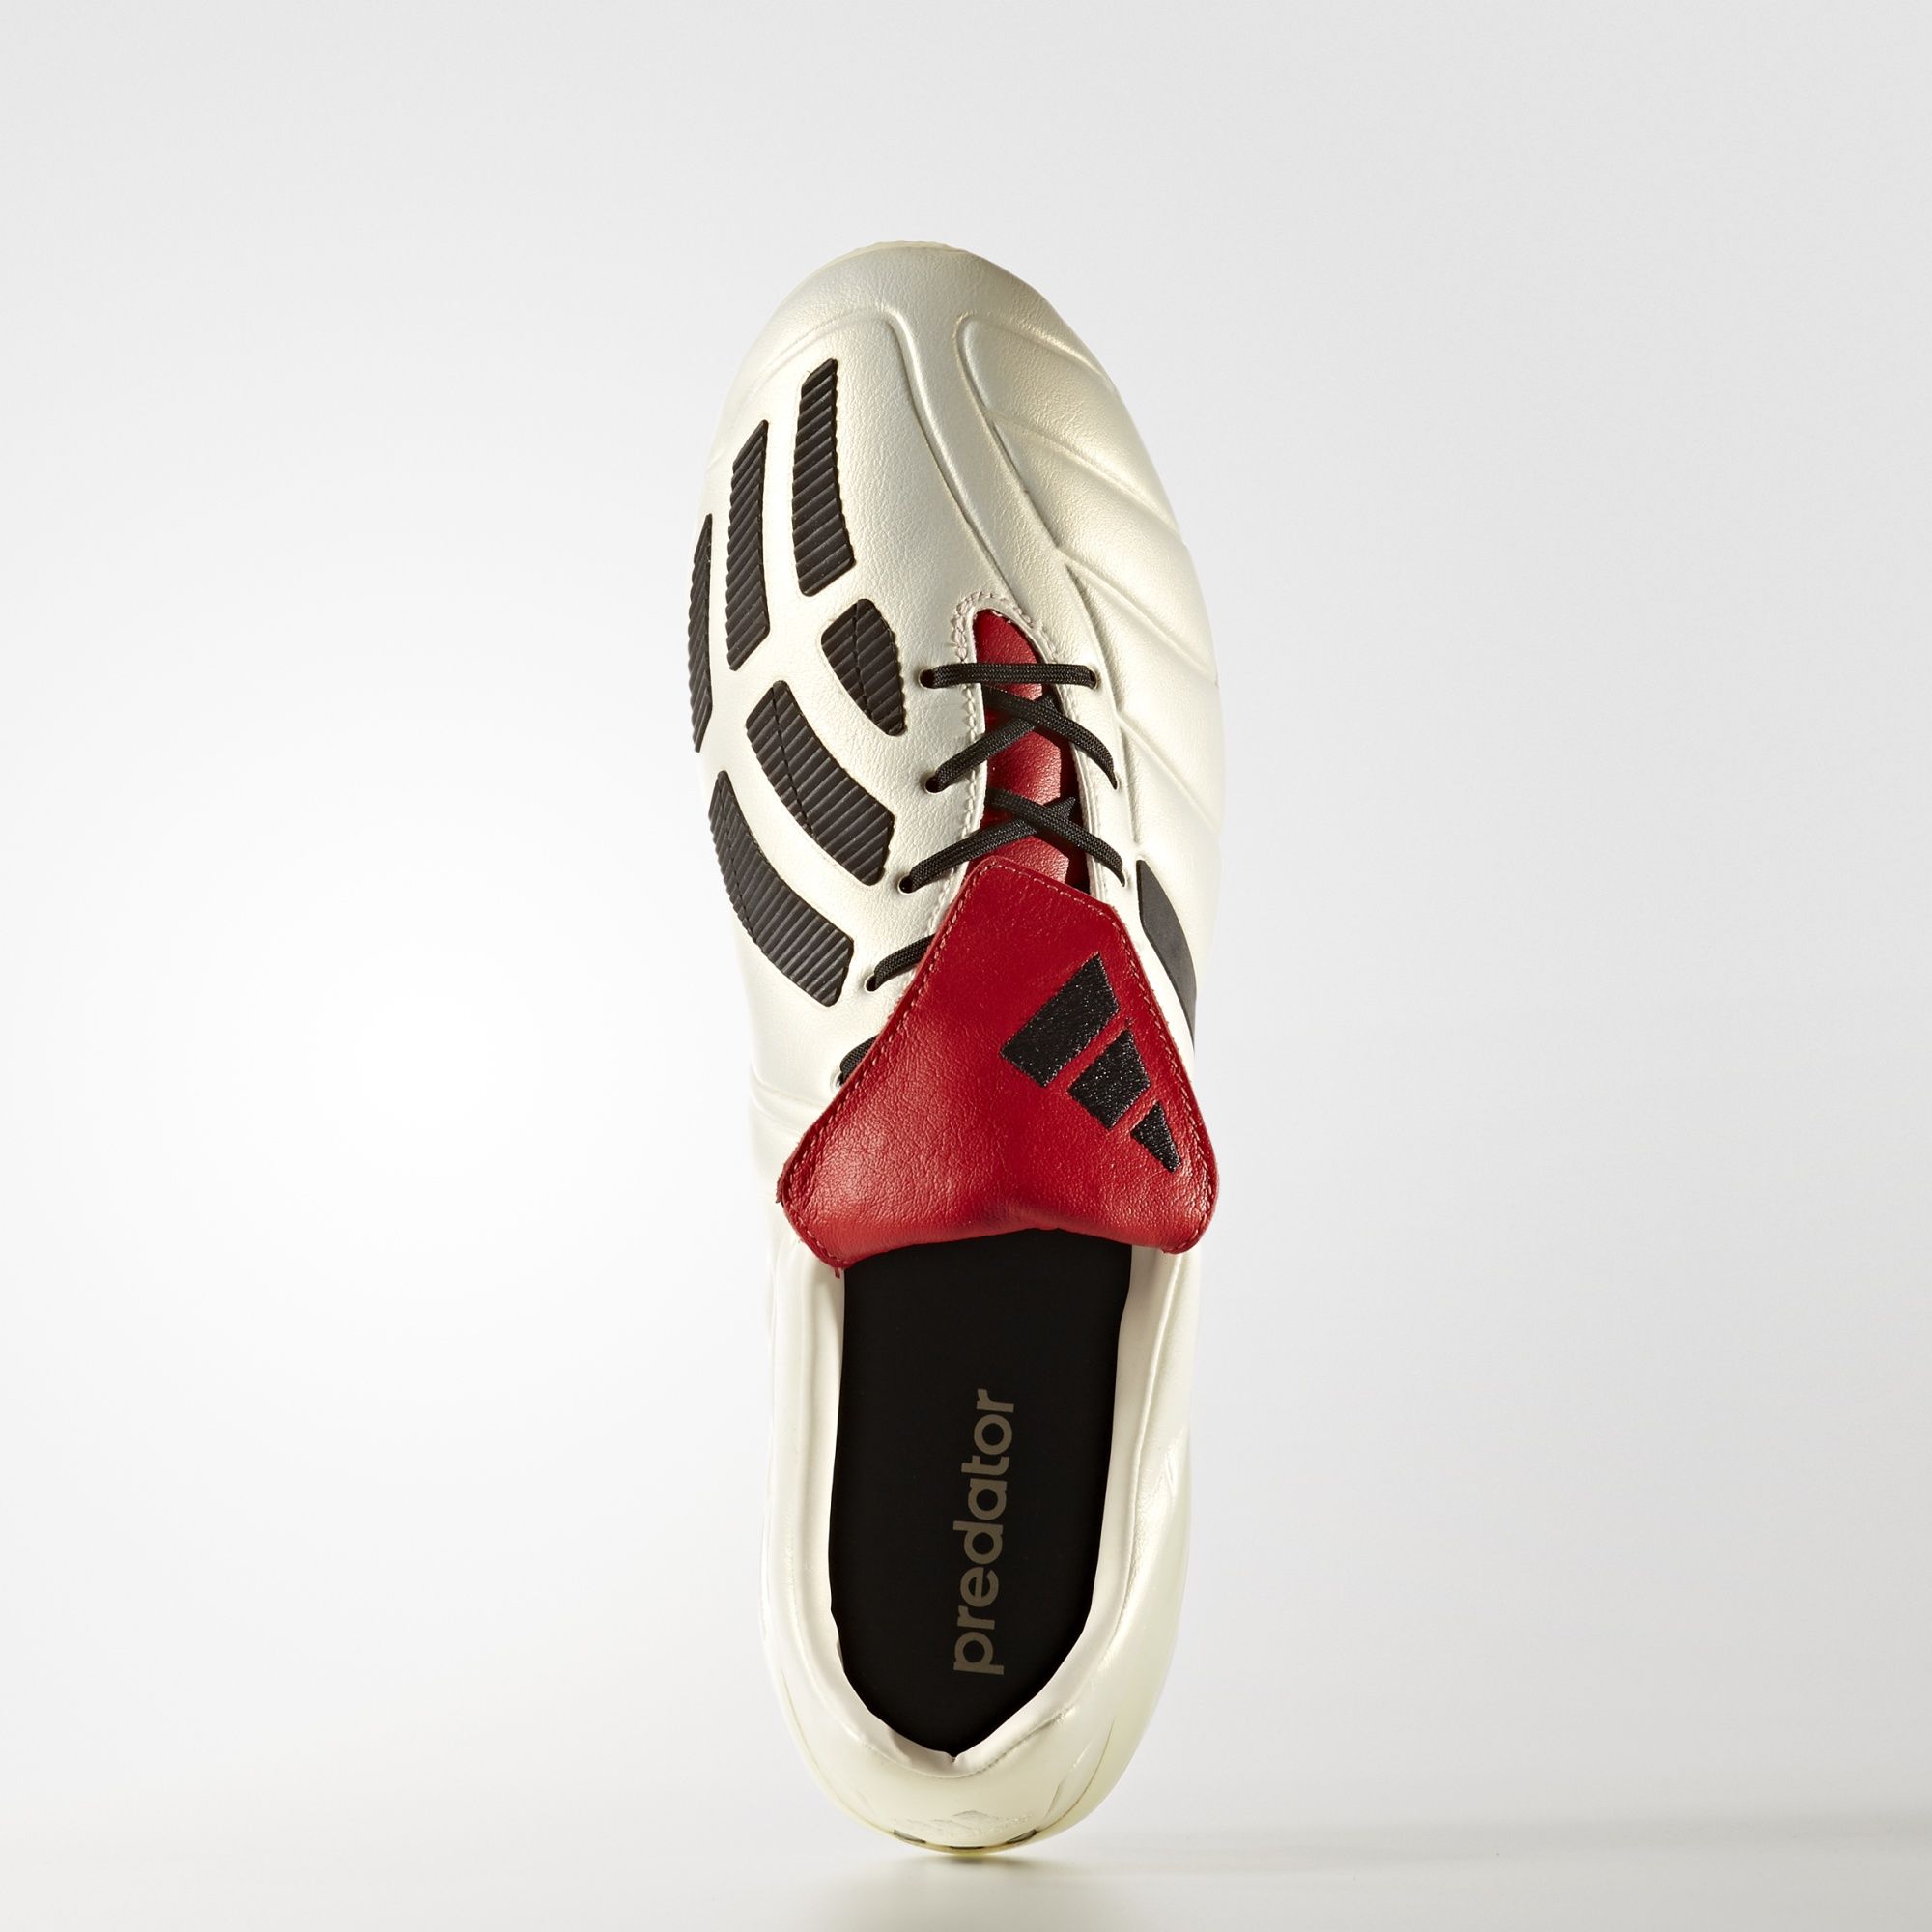 FootballShirtCulture.com on Twitter: "Adidas Mania Firm Ground Boots - White / Black / Red Buy https://t.co/o8S80Dgh0p #futbol #footballboots #adidasfootball https://t.co/su4vRgFNPv" /